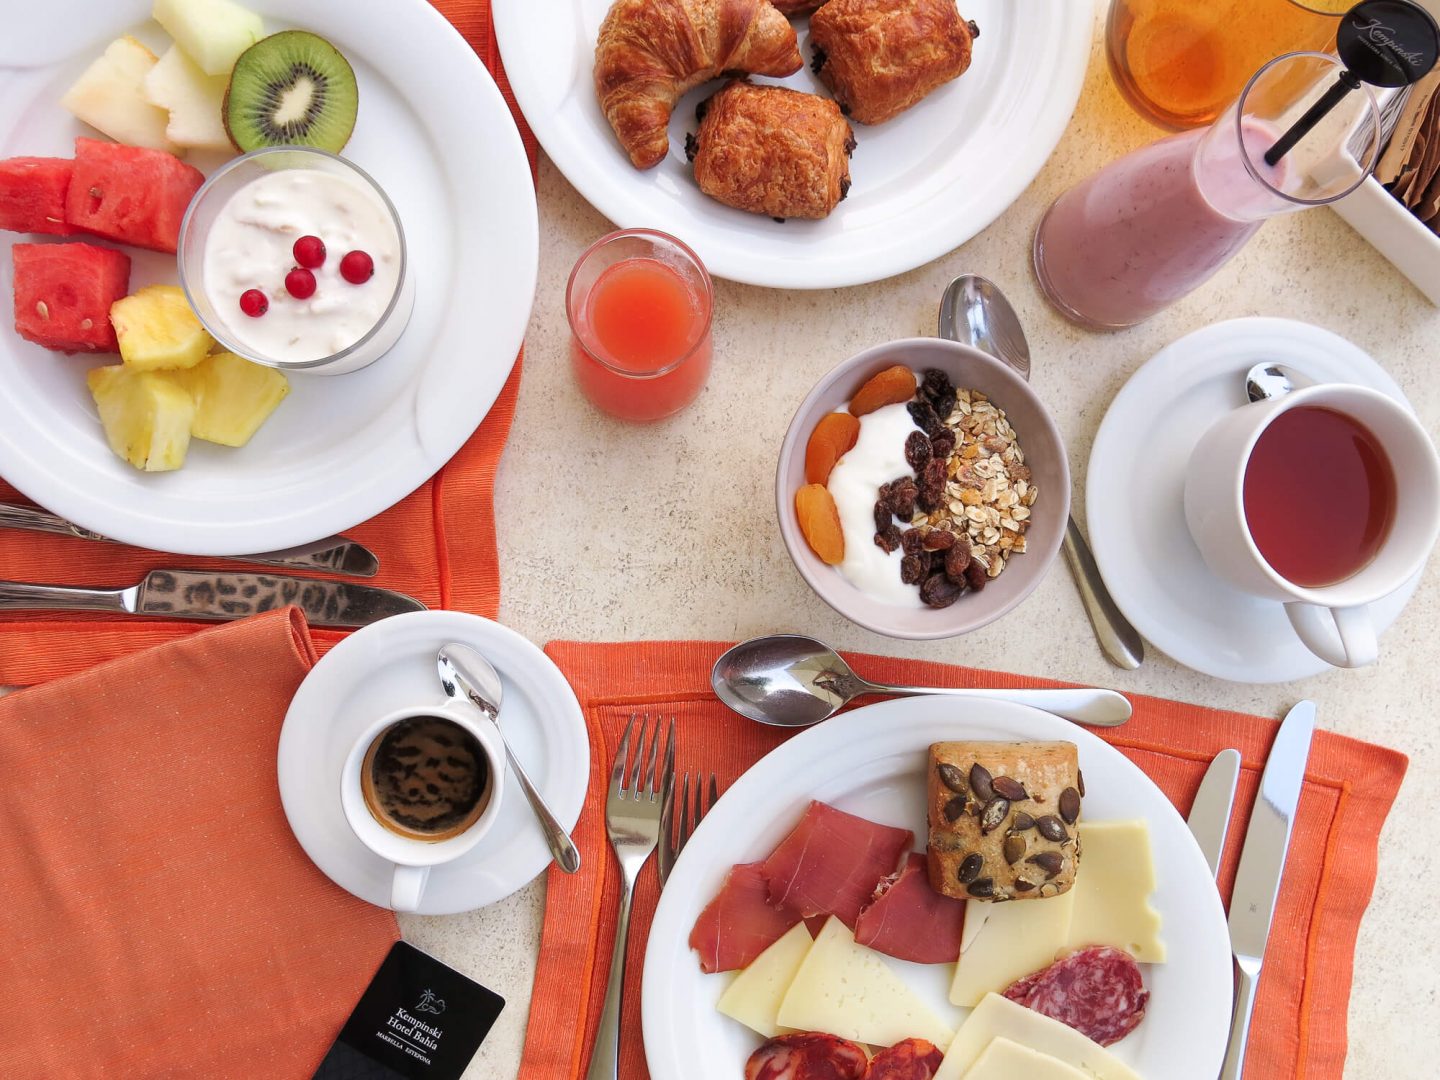 An incredible hotel breakfast at Kempinski Hotel Bahía, Spain